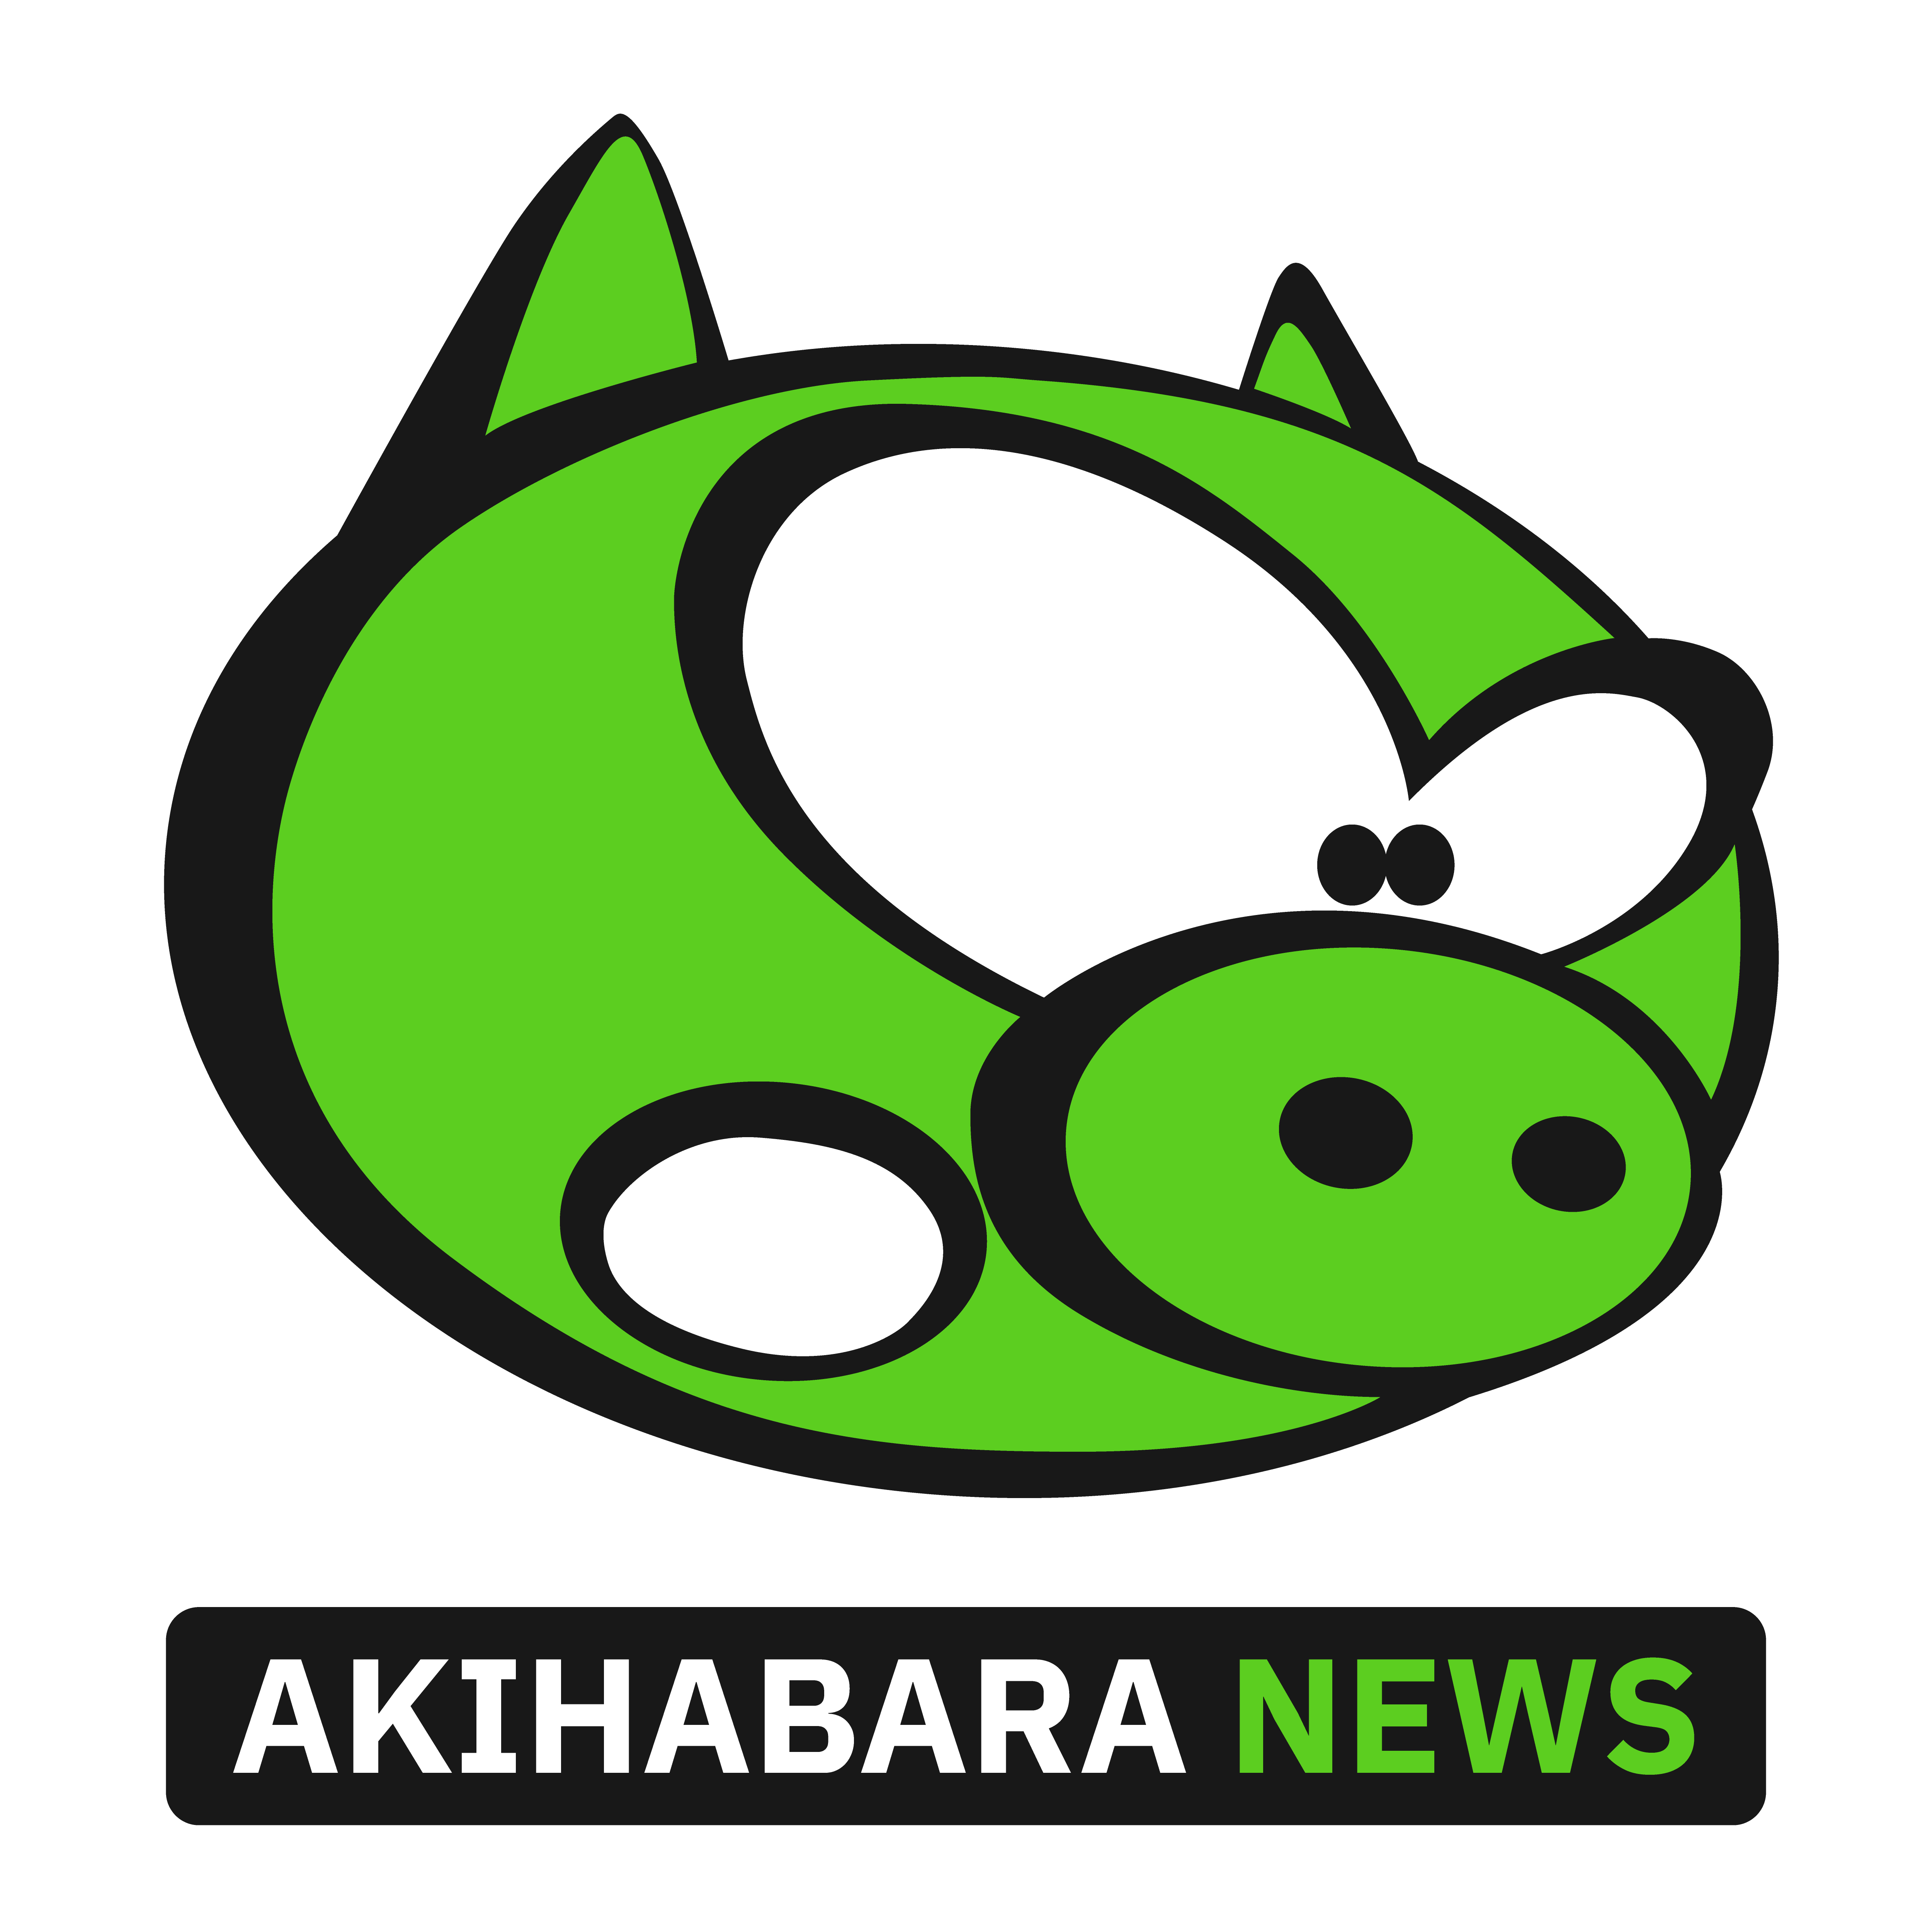 (c) Akihabaranews.com